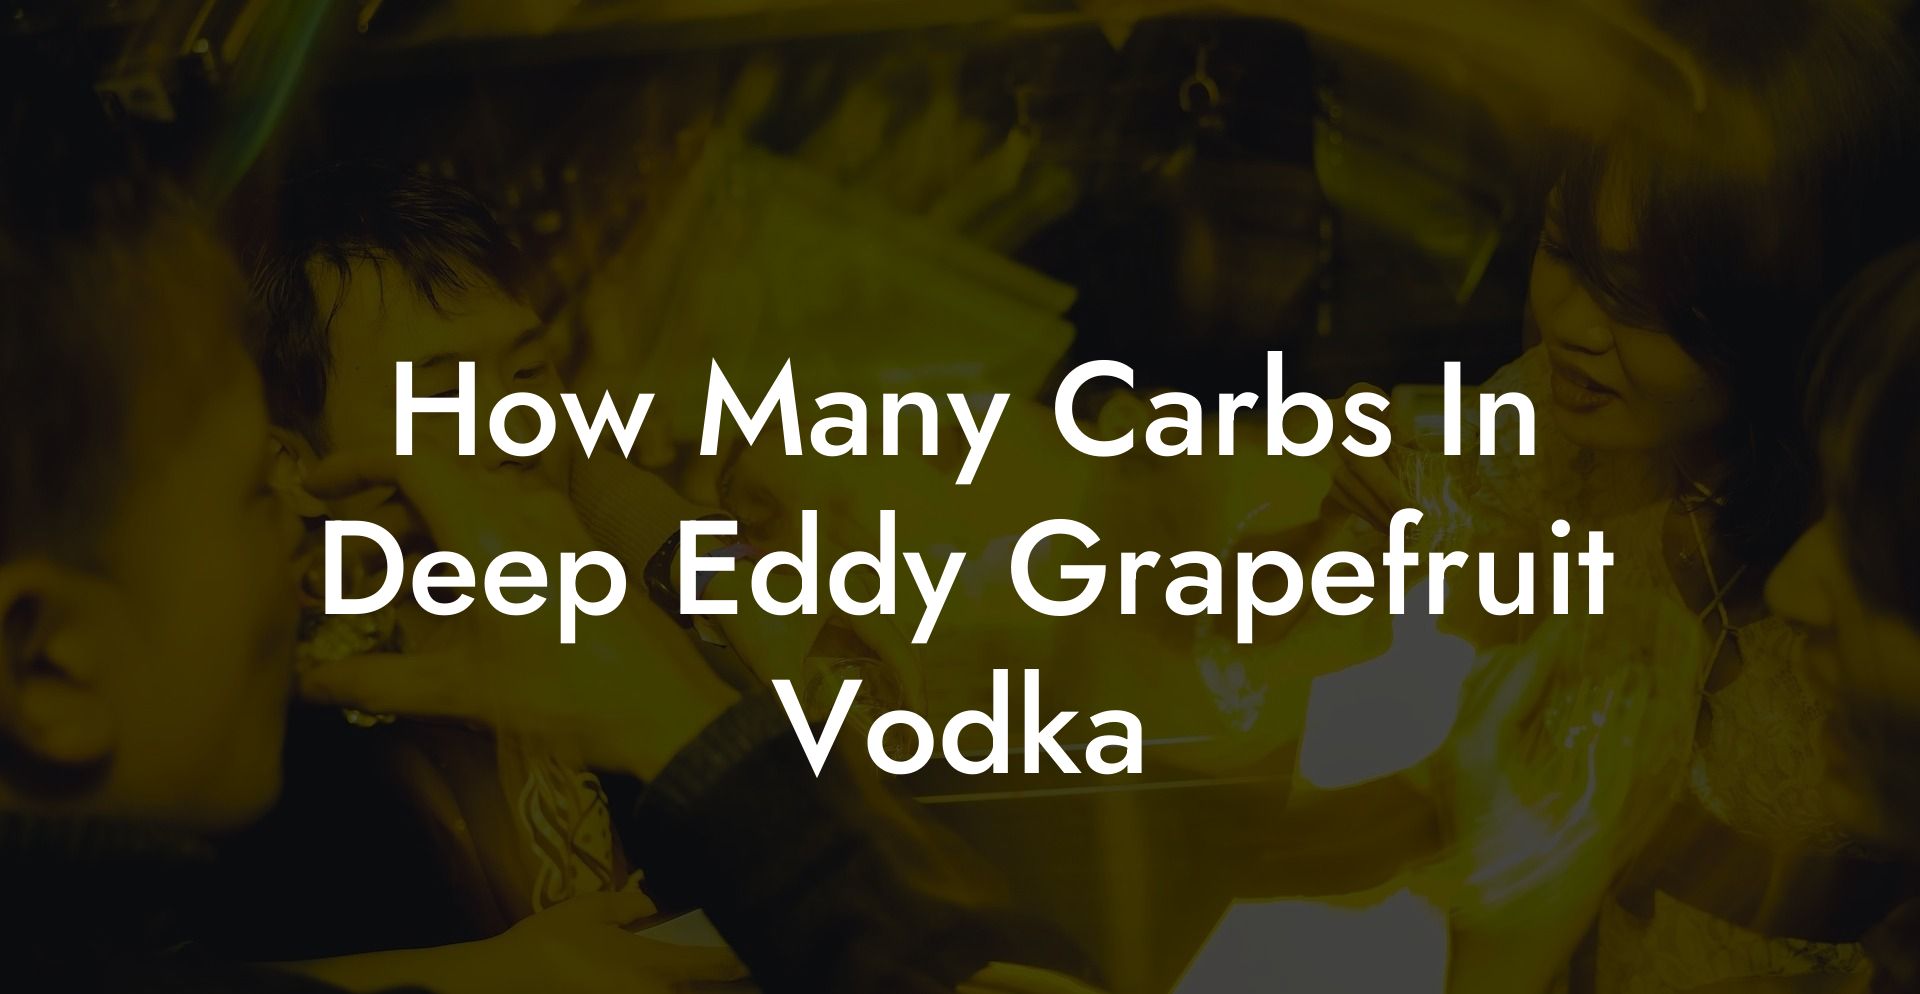 How Many Carbs In Deep Eddy Grapefruit Vodka